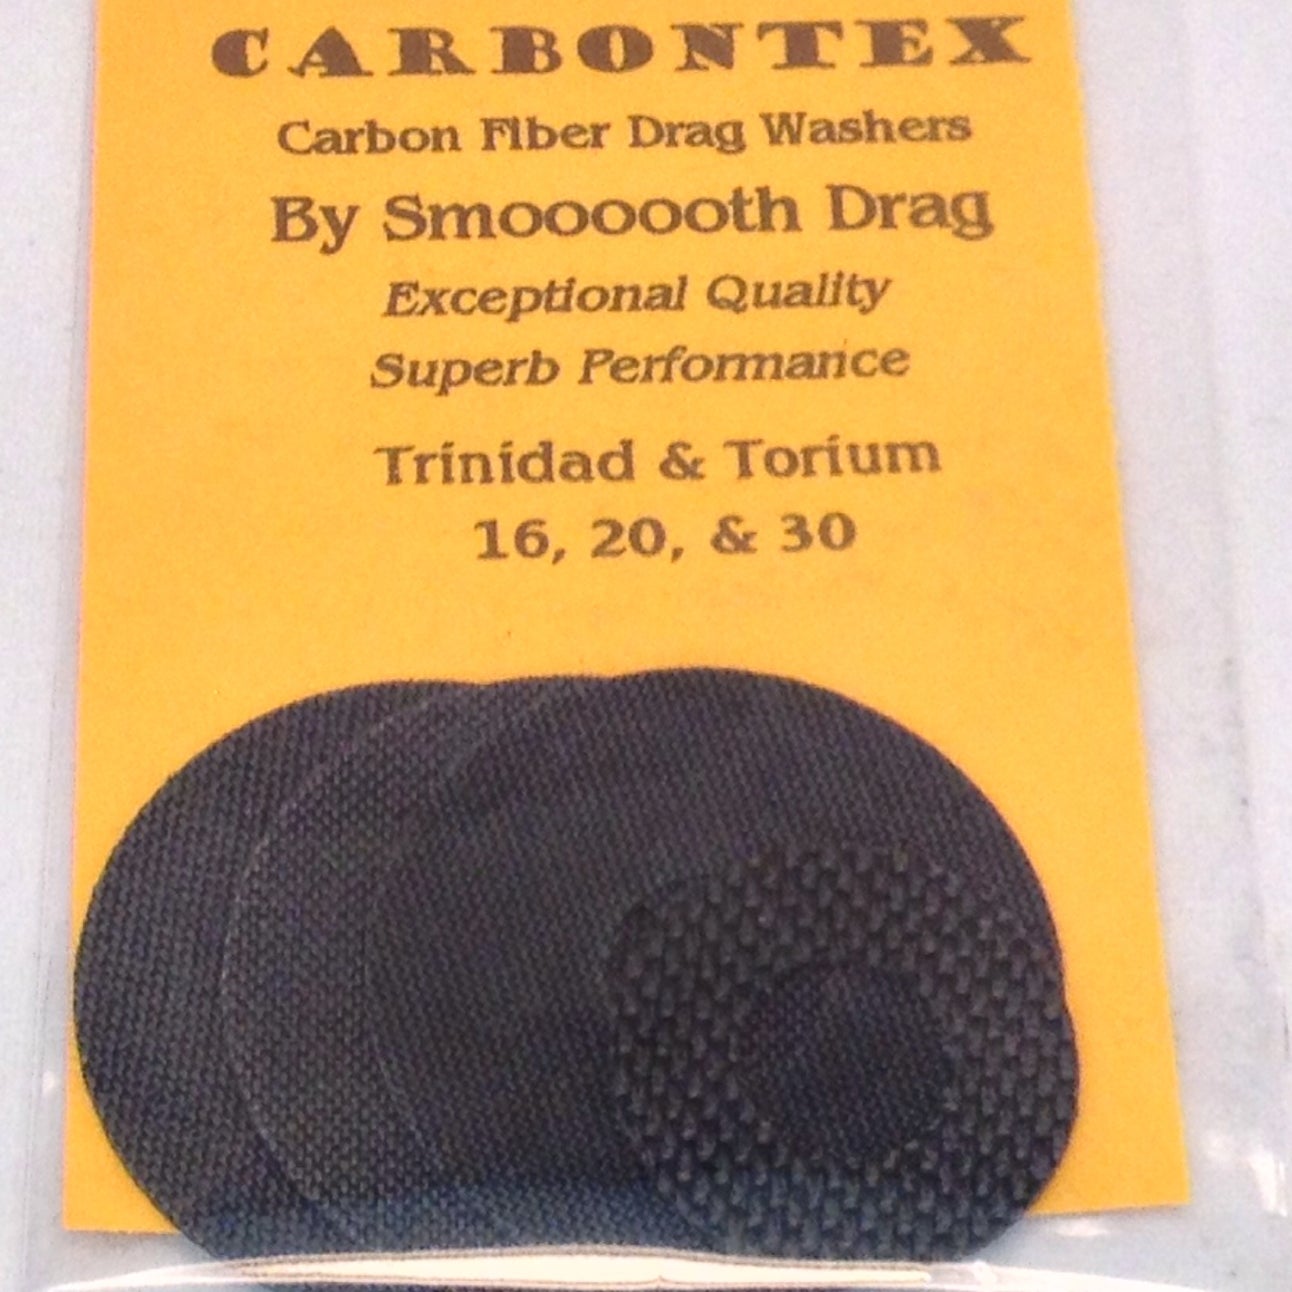 30 TORIUM 16-30 20 Carbontex Carbon Fiber Drag Washers SHIMANO TRINIDAD 16